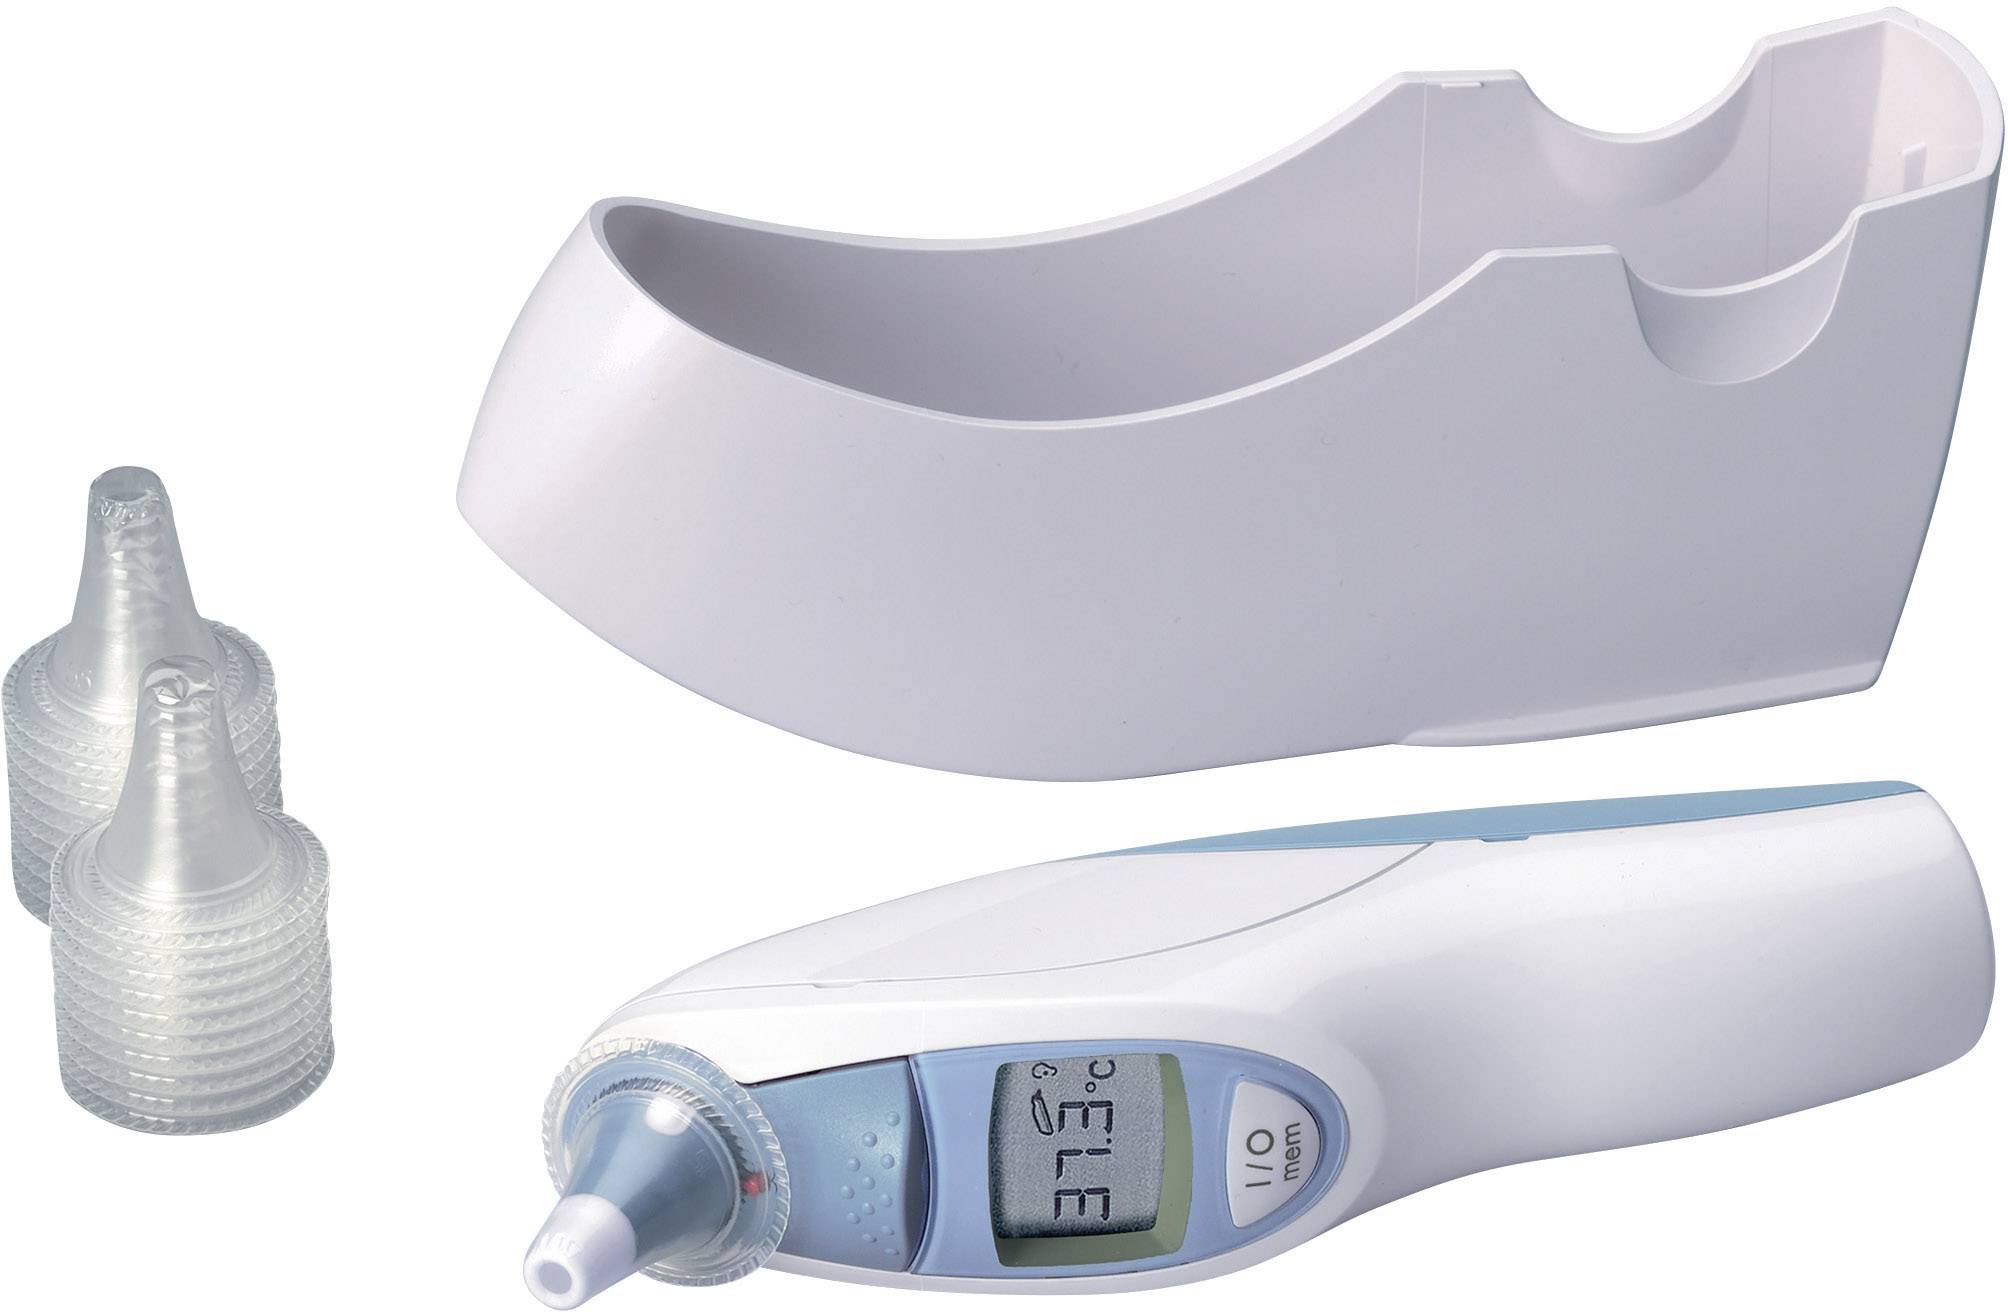 hoek circulatie neem medicijnen Braun ThermoScan® IRT4520 IR fever thermometer Pre-heated probe | Conrad.com